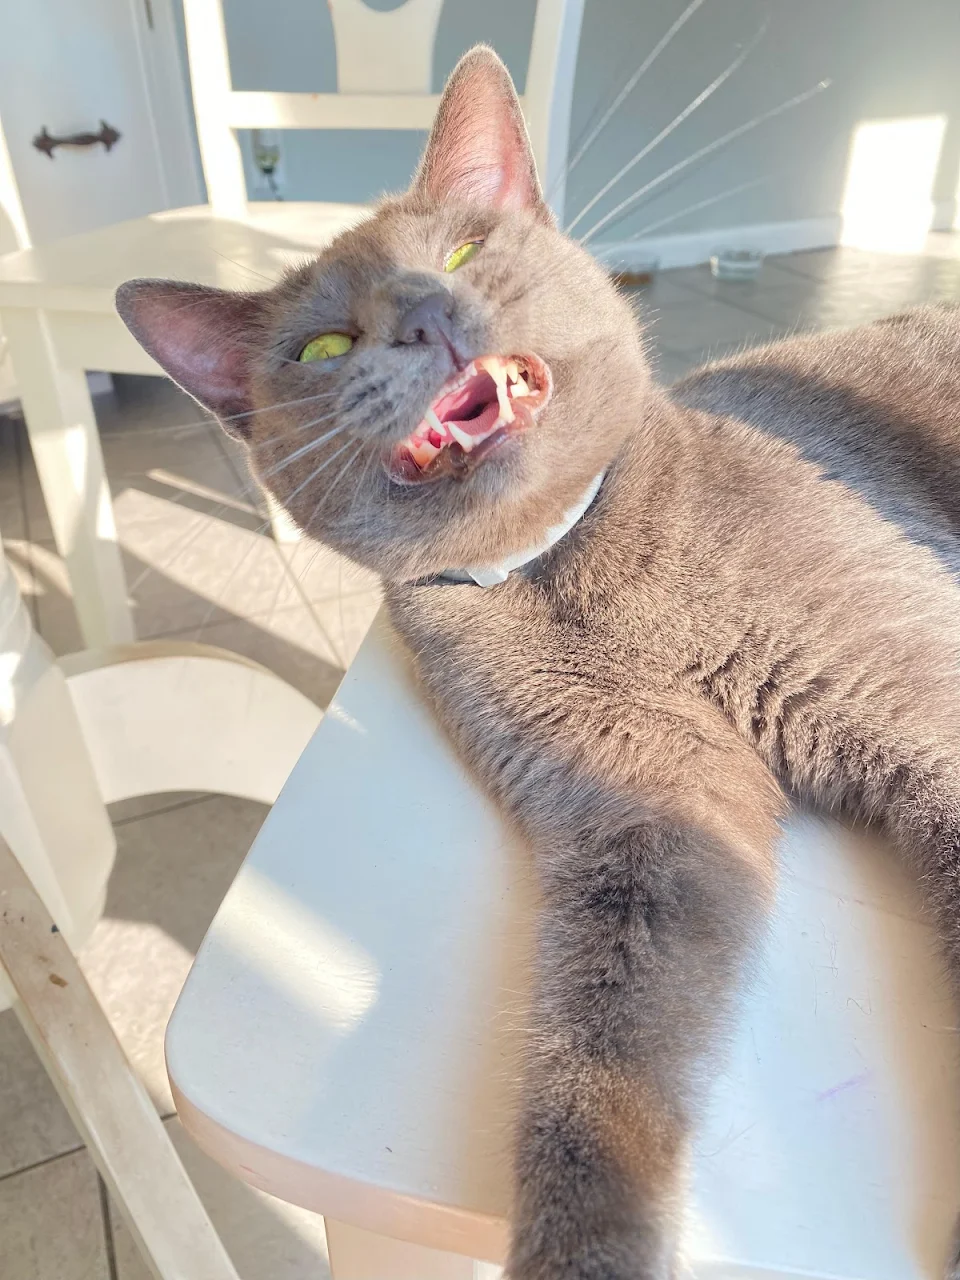 this cat mid sneeze